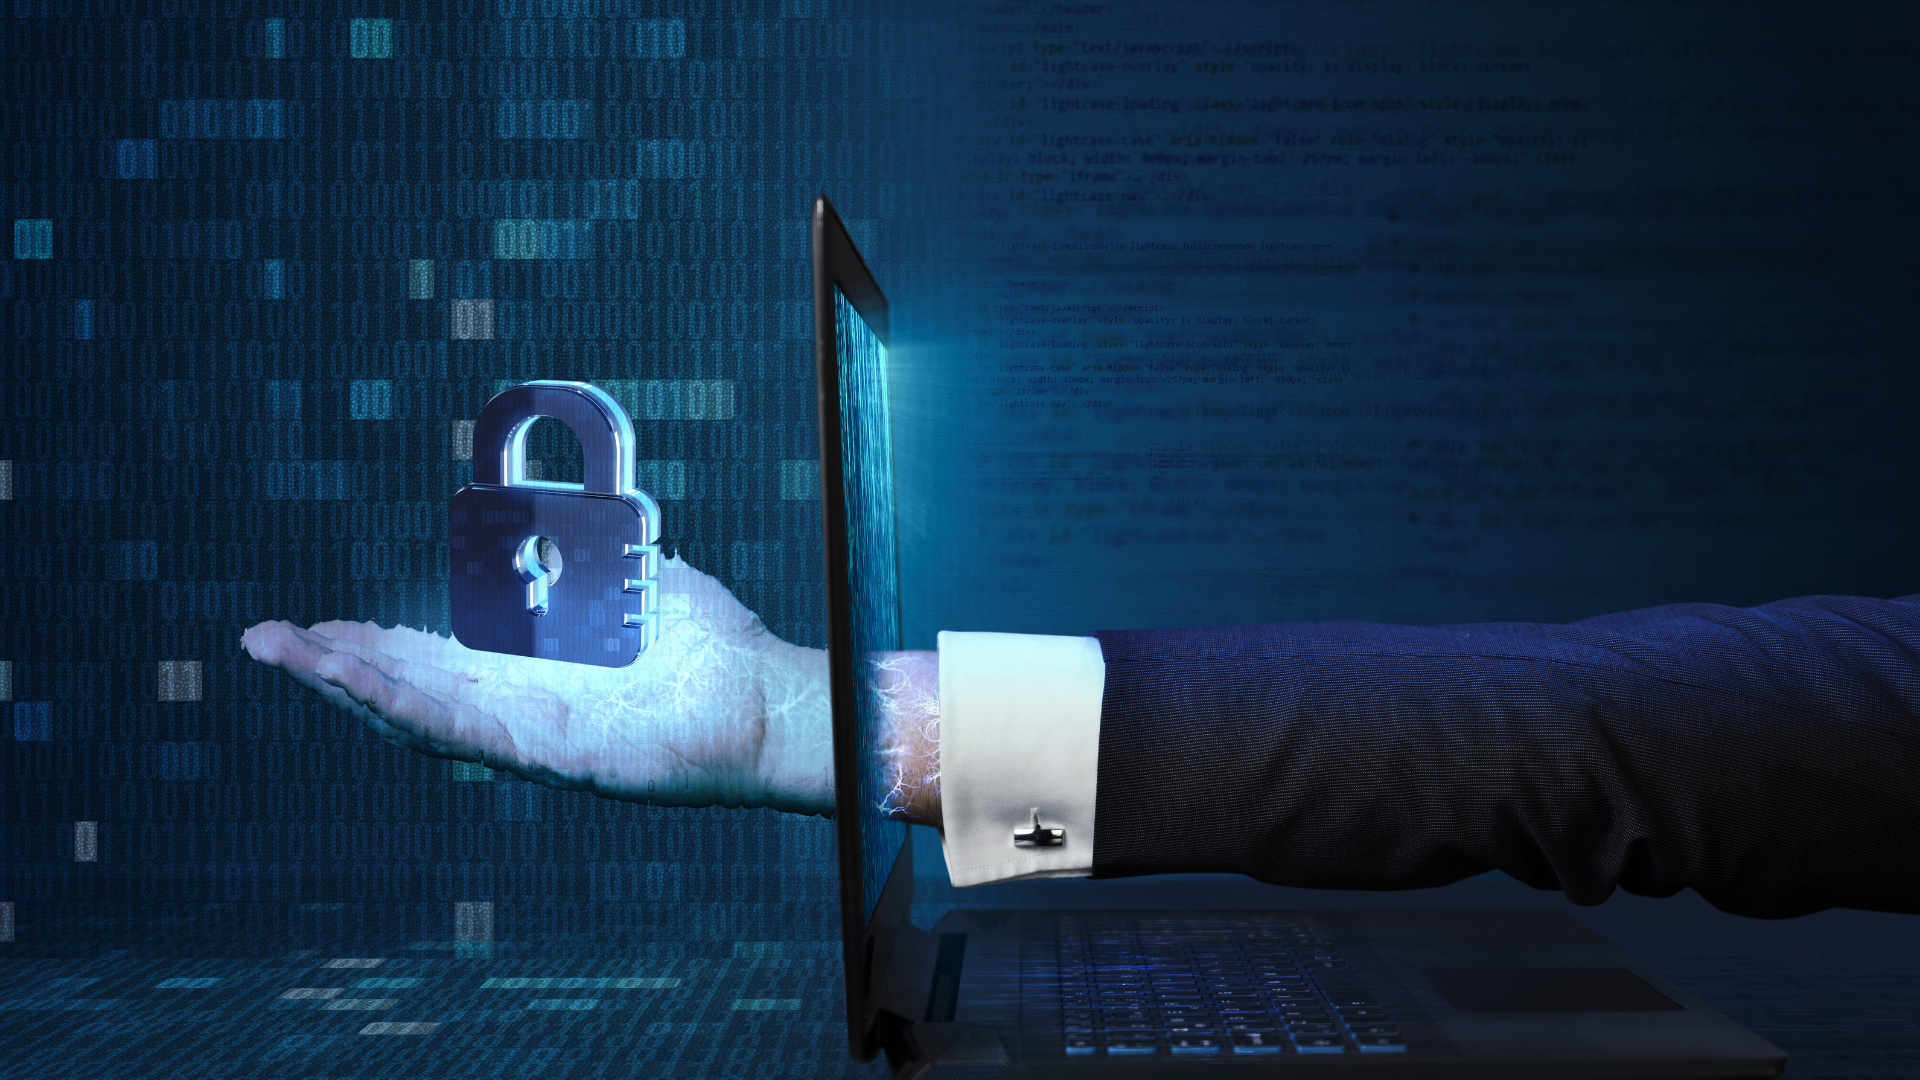 8 februari: Cybersecurity Online sessie